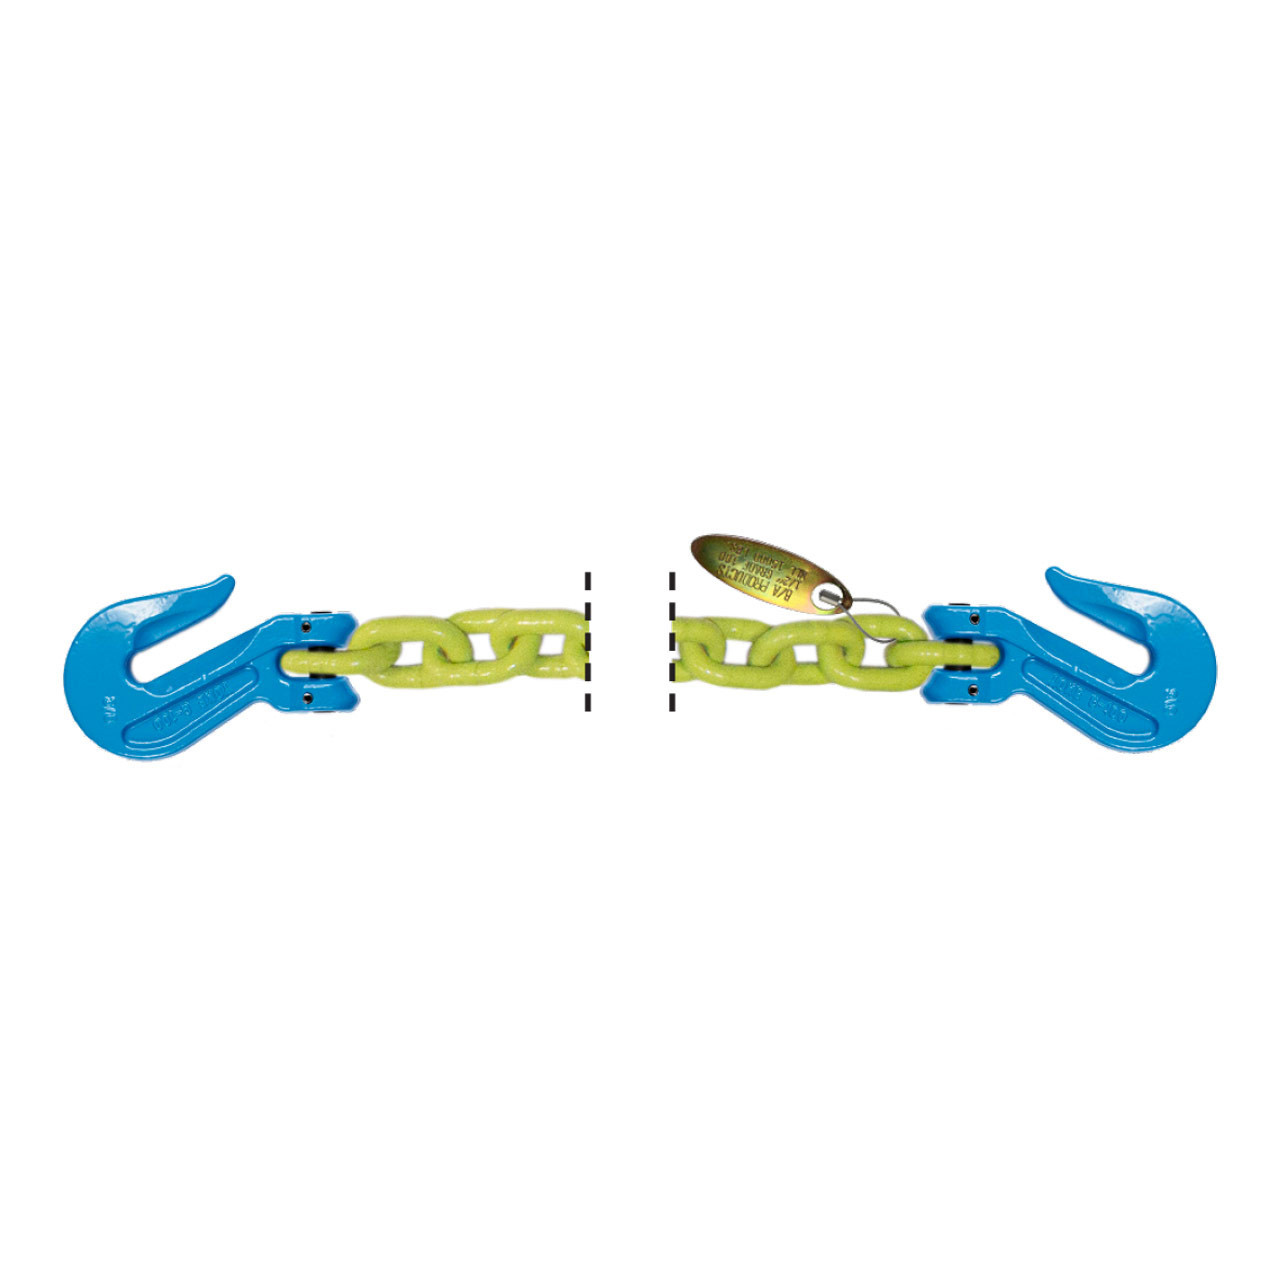 G100 High Grade Chains w/ Grab Hooks